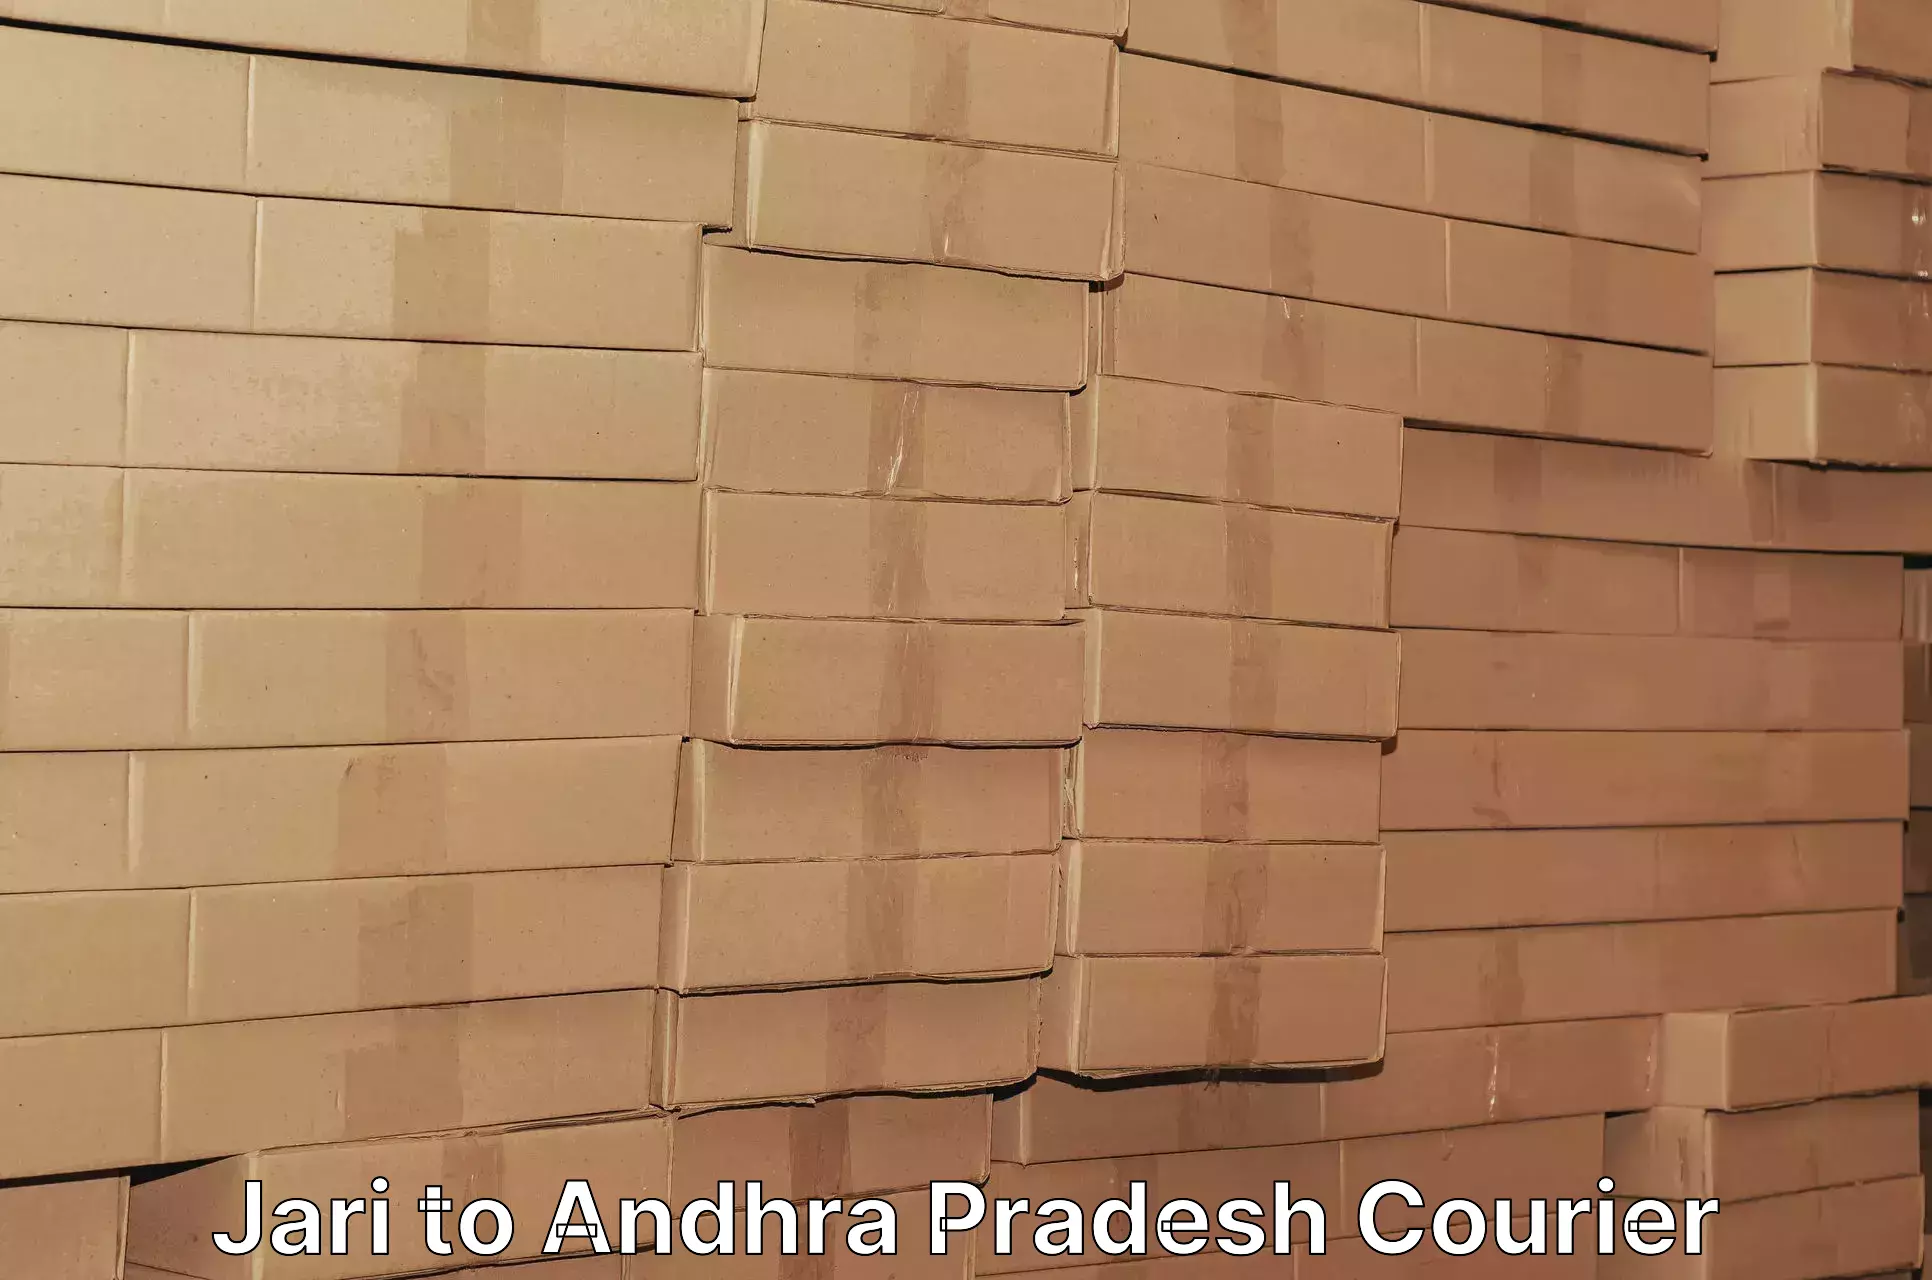 Courier service partnerships in Jari to Andhra Pradesh